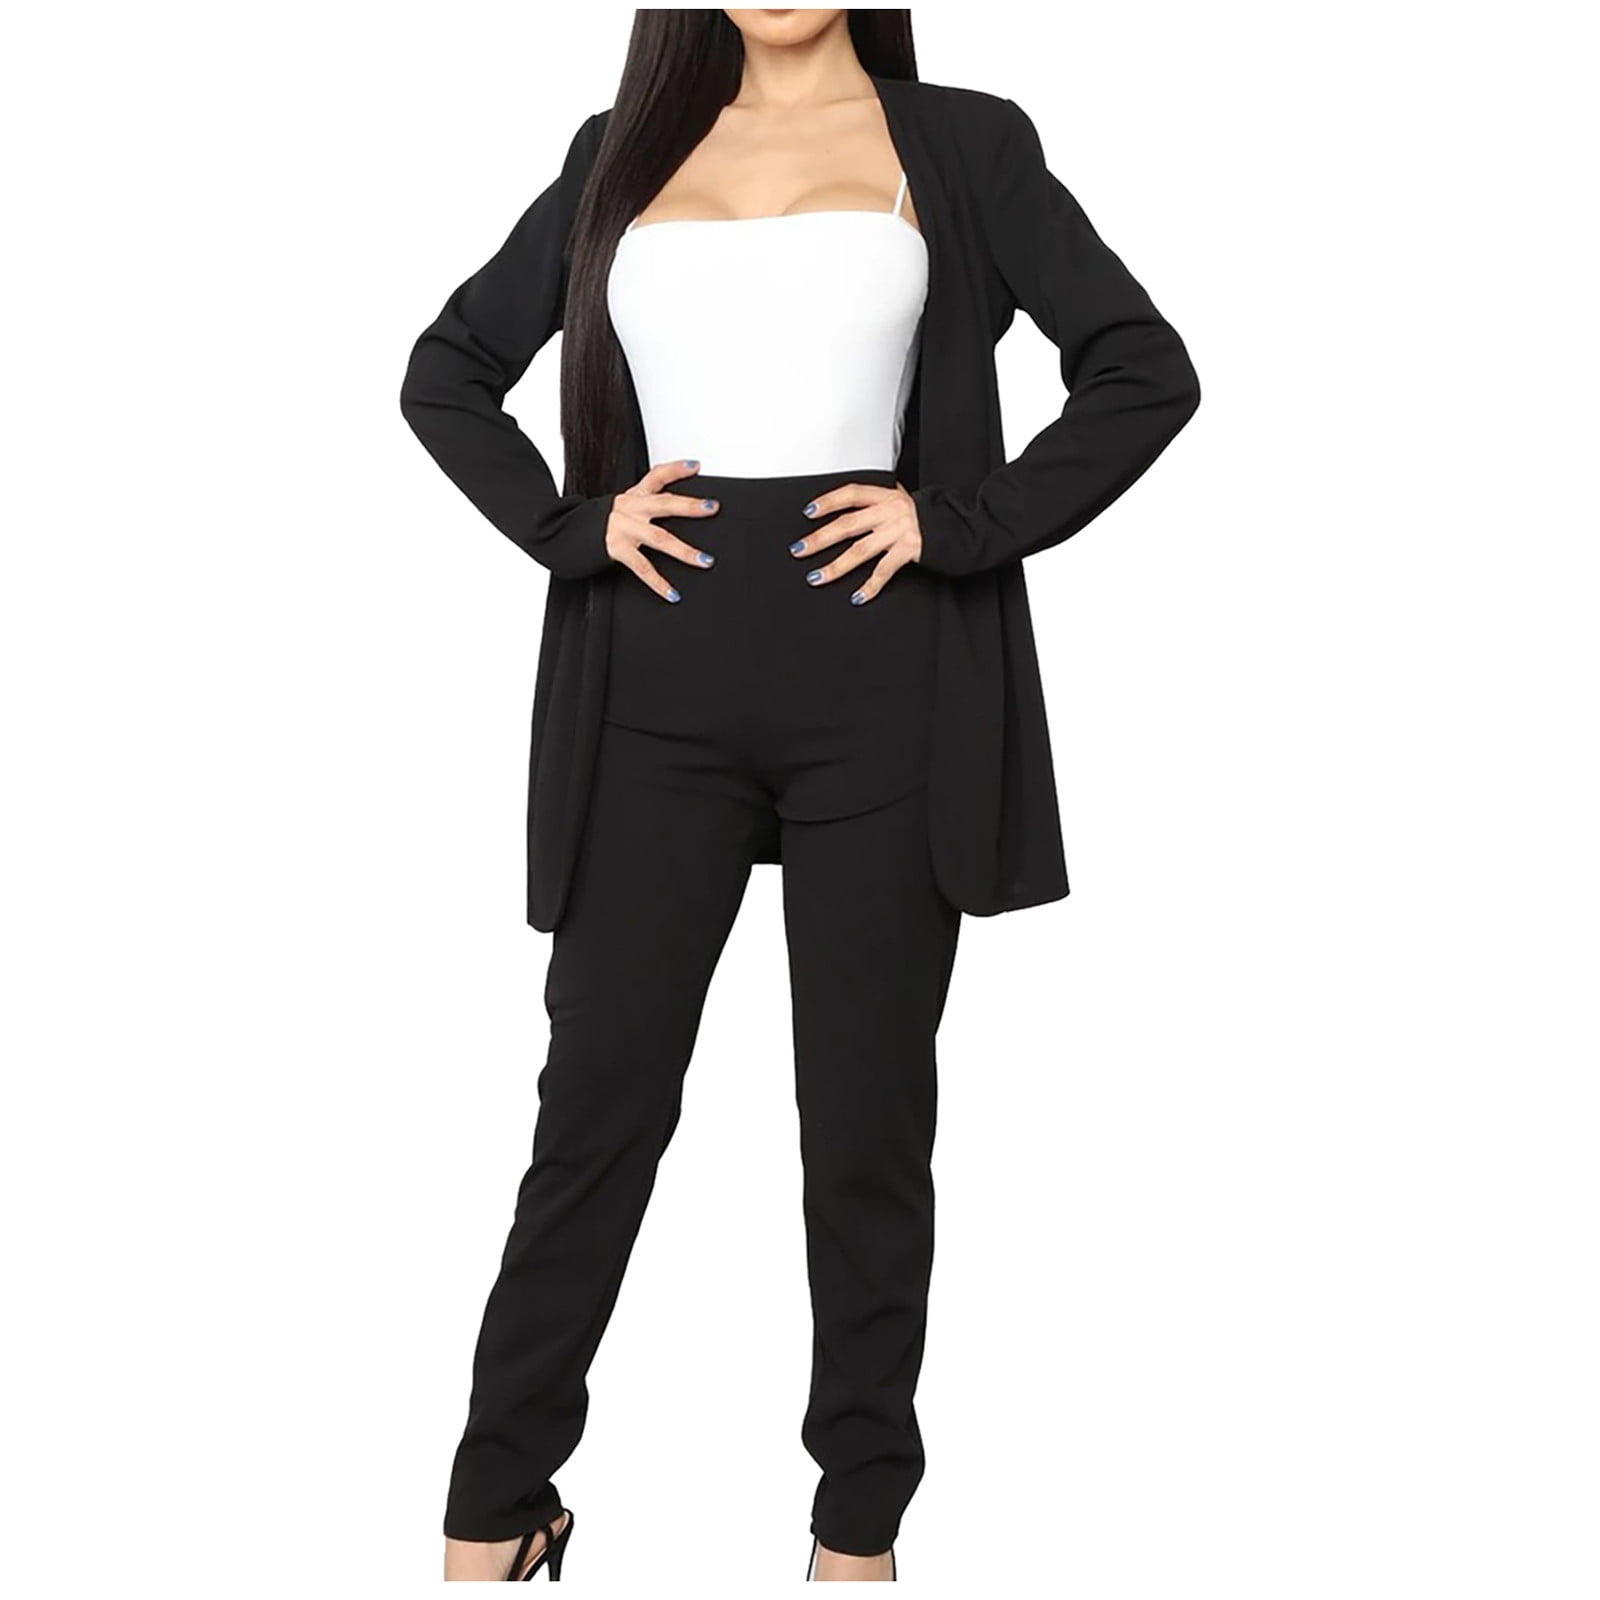 YWDJ Two Piece Outfits for Women Dressy Plus Size Business Attire